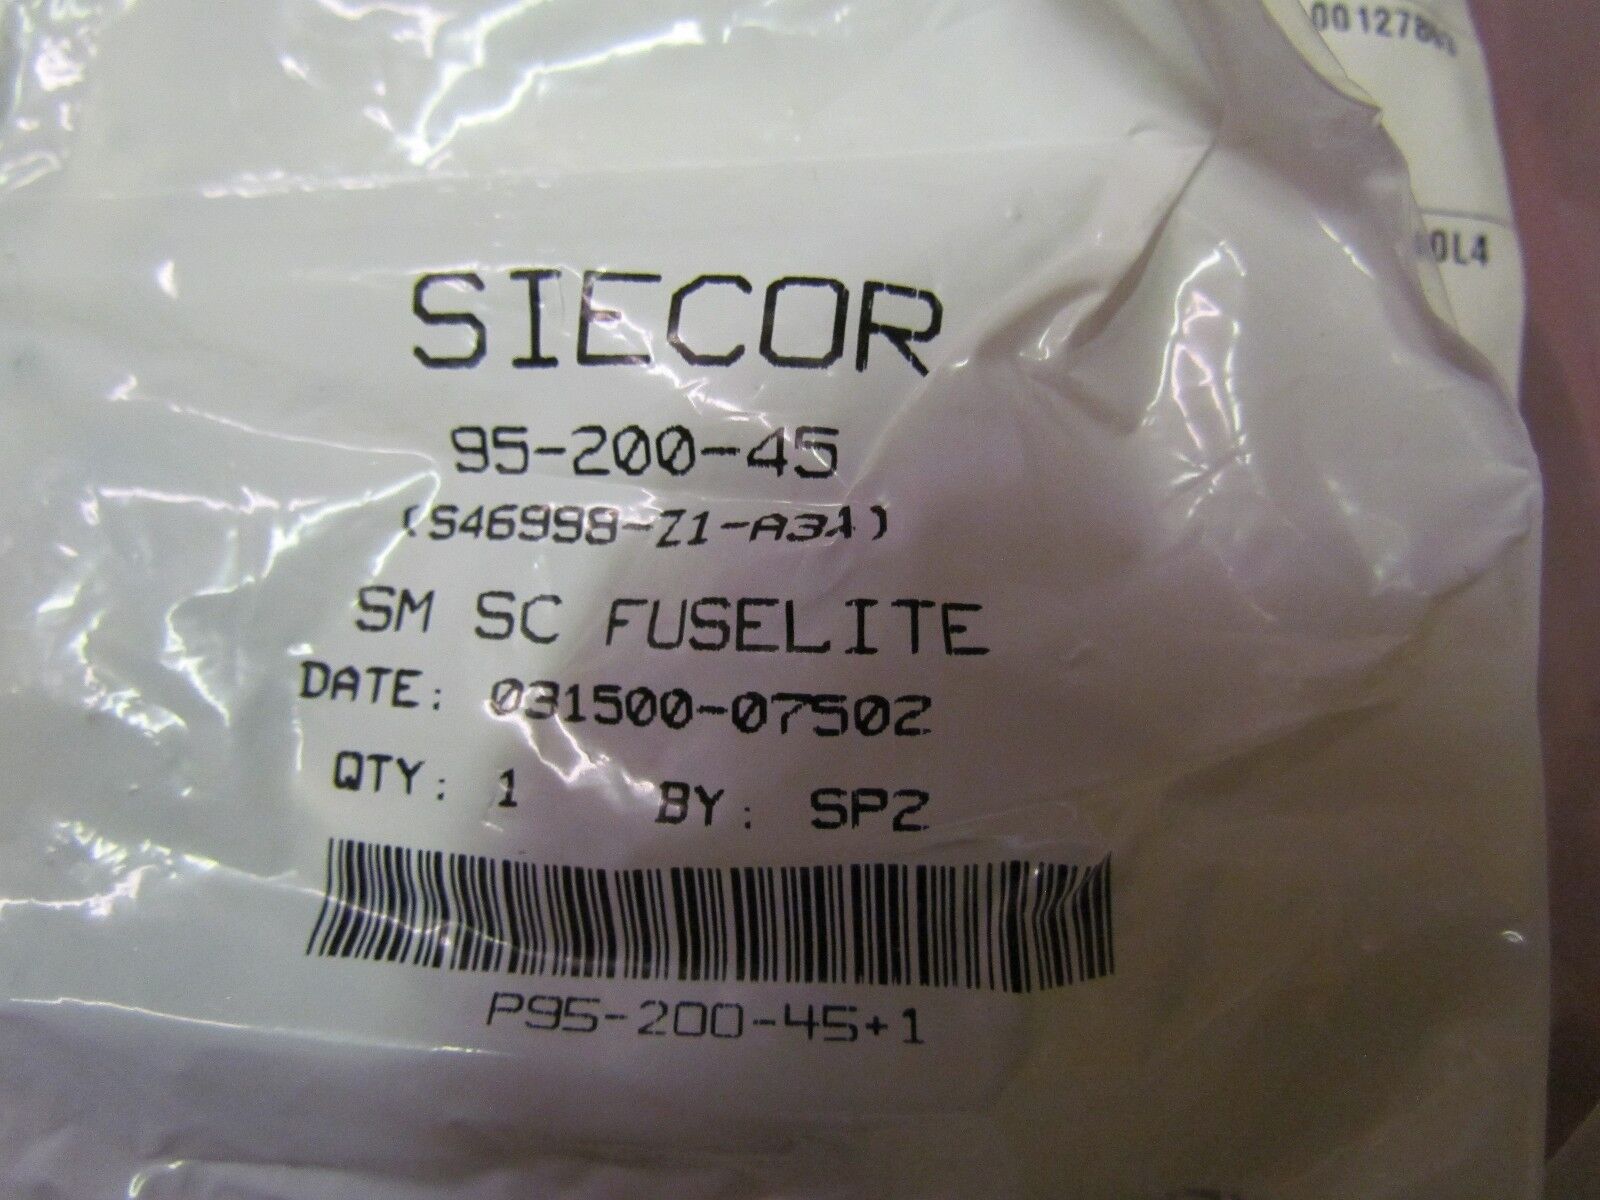 NEW Corning SC SM Fuselite Fiber Optic Connector 95-200-45 / S46998-Z1-A34